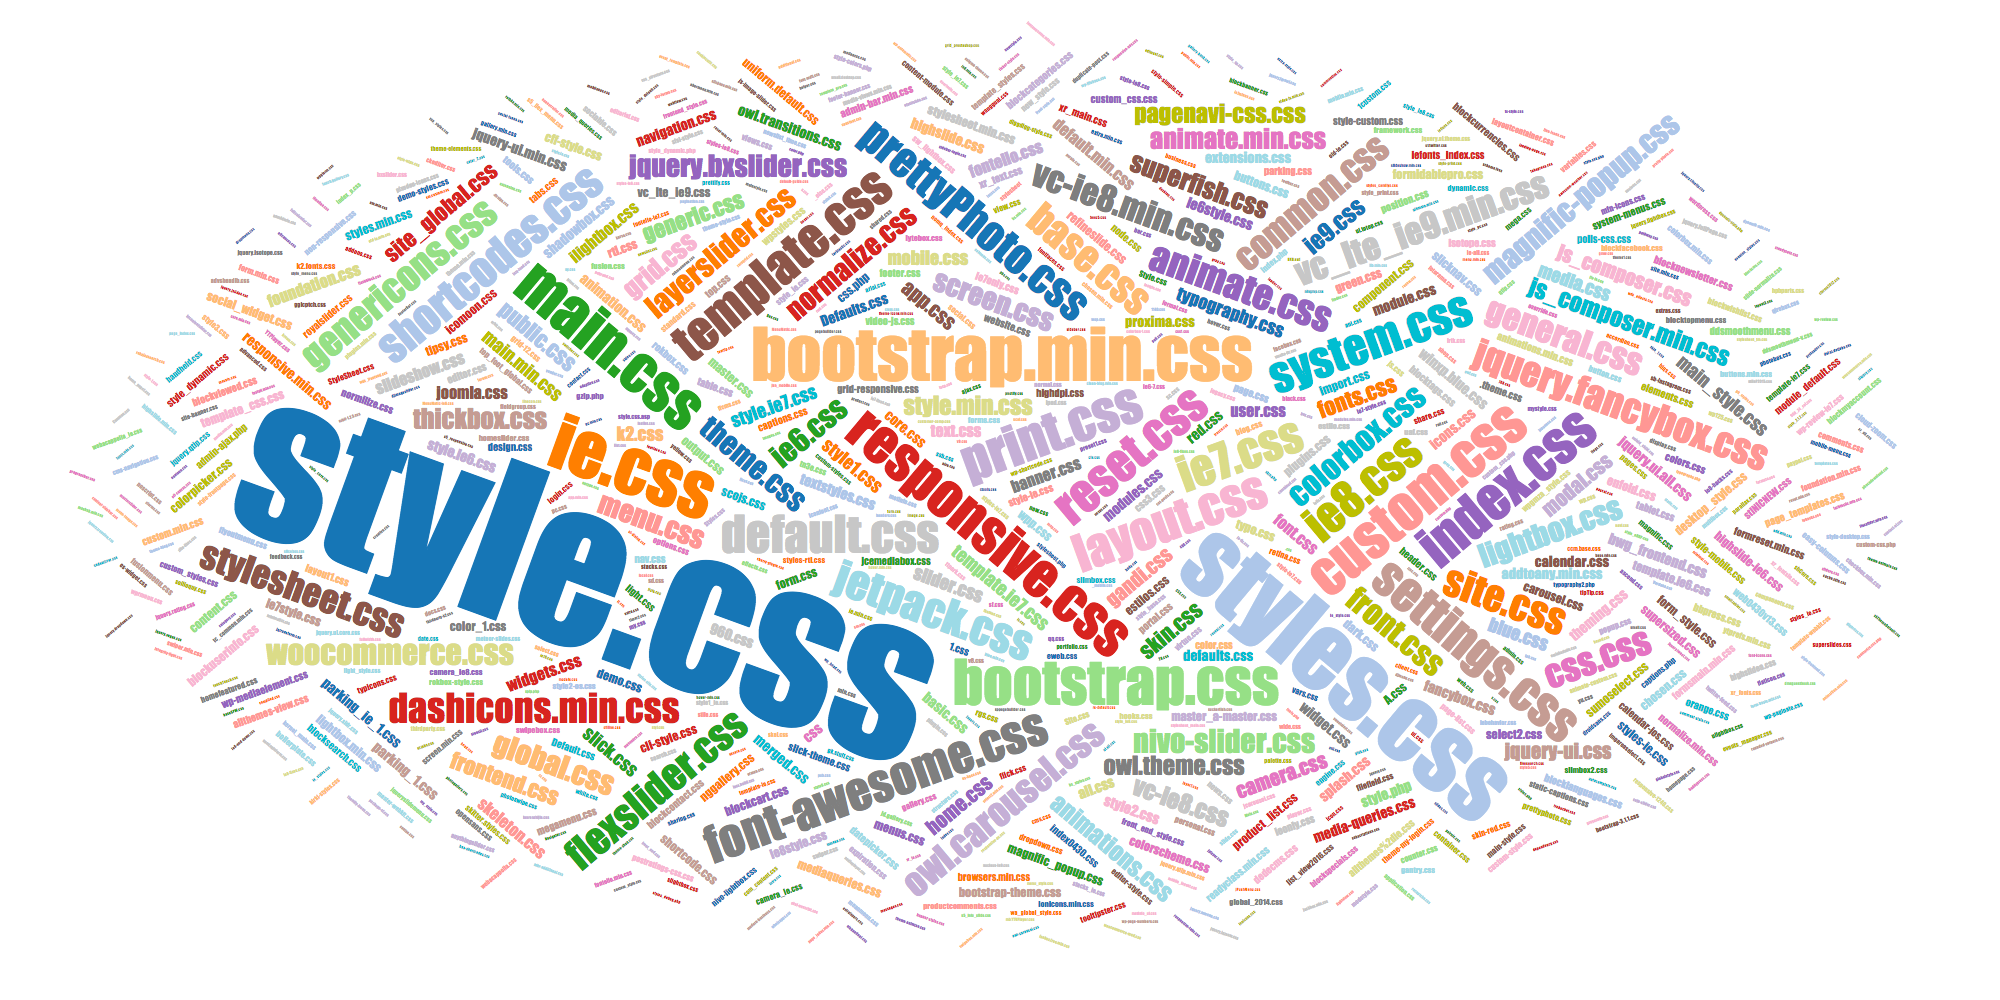 Popular names of CSS files owl.carousel.css, owl.theme.css, etc.